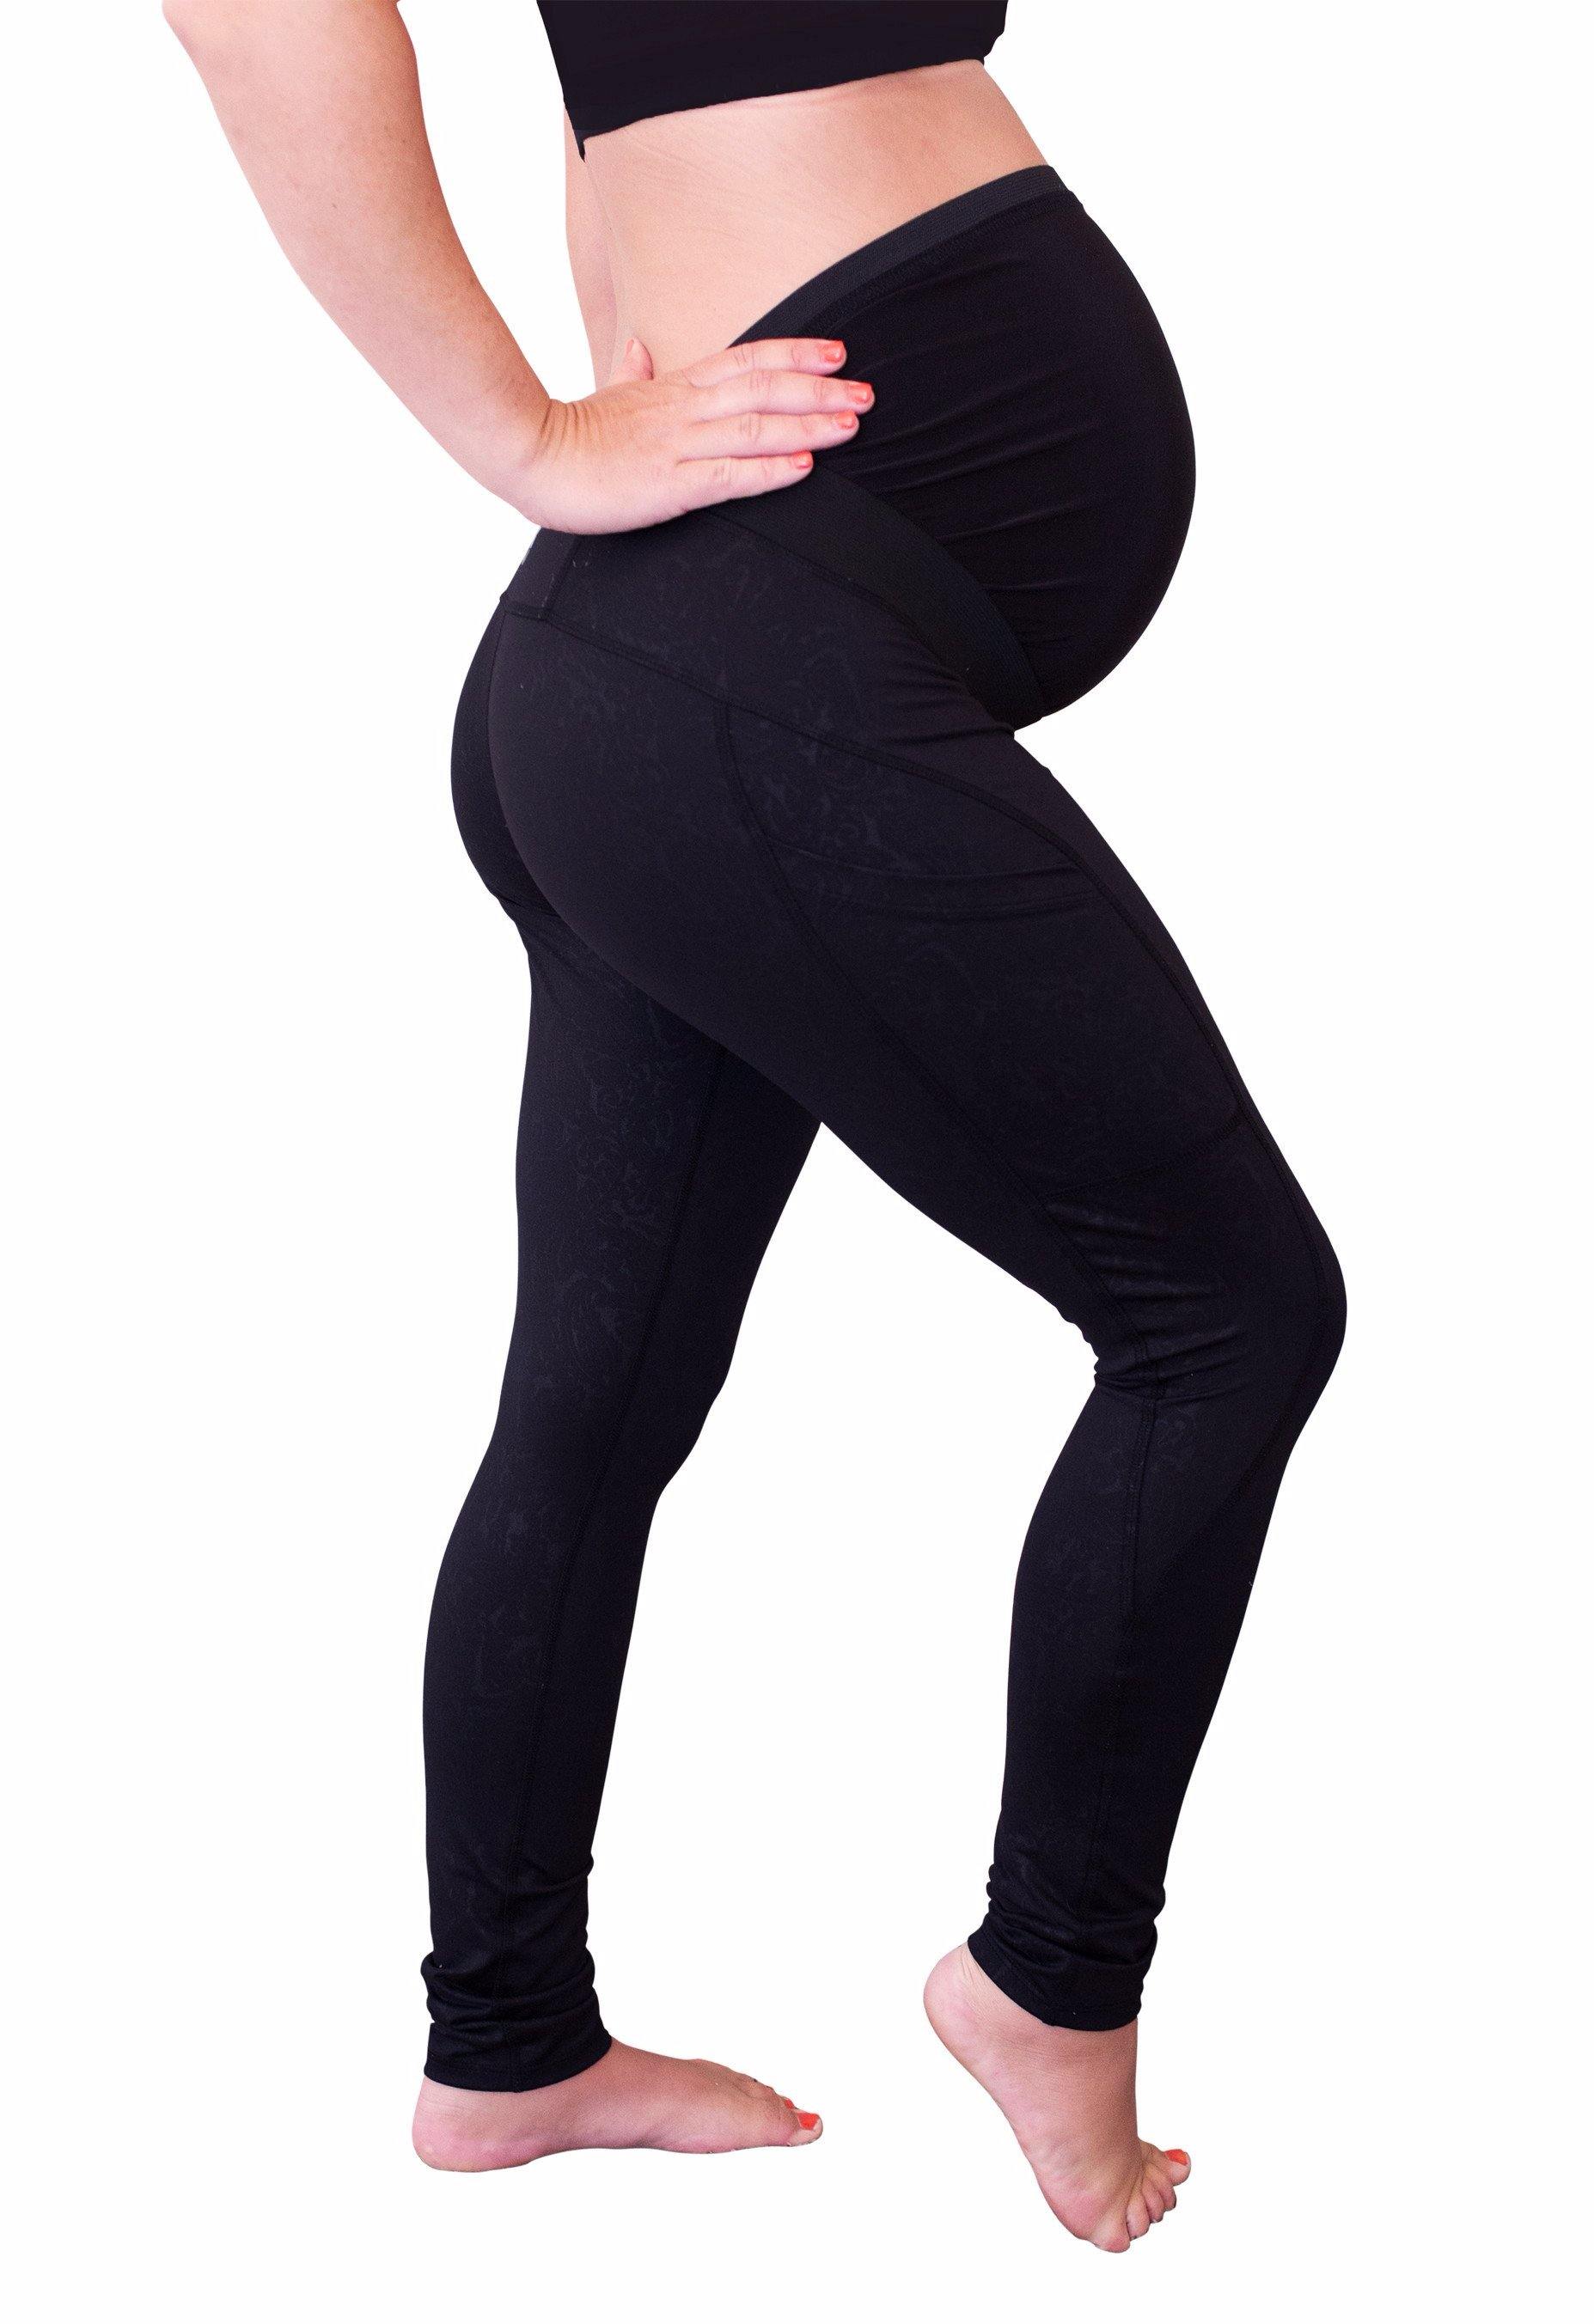 Mumberry® Maternity Leggings, Belly Band